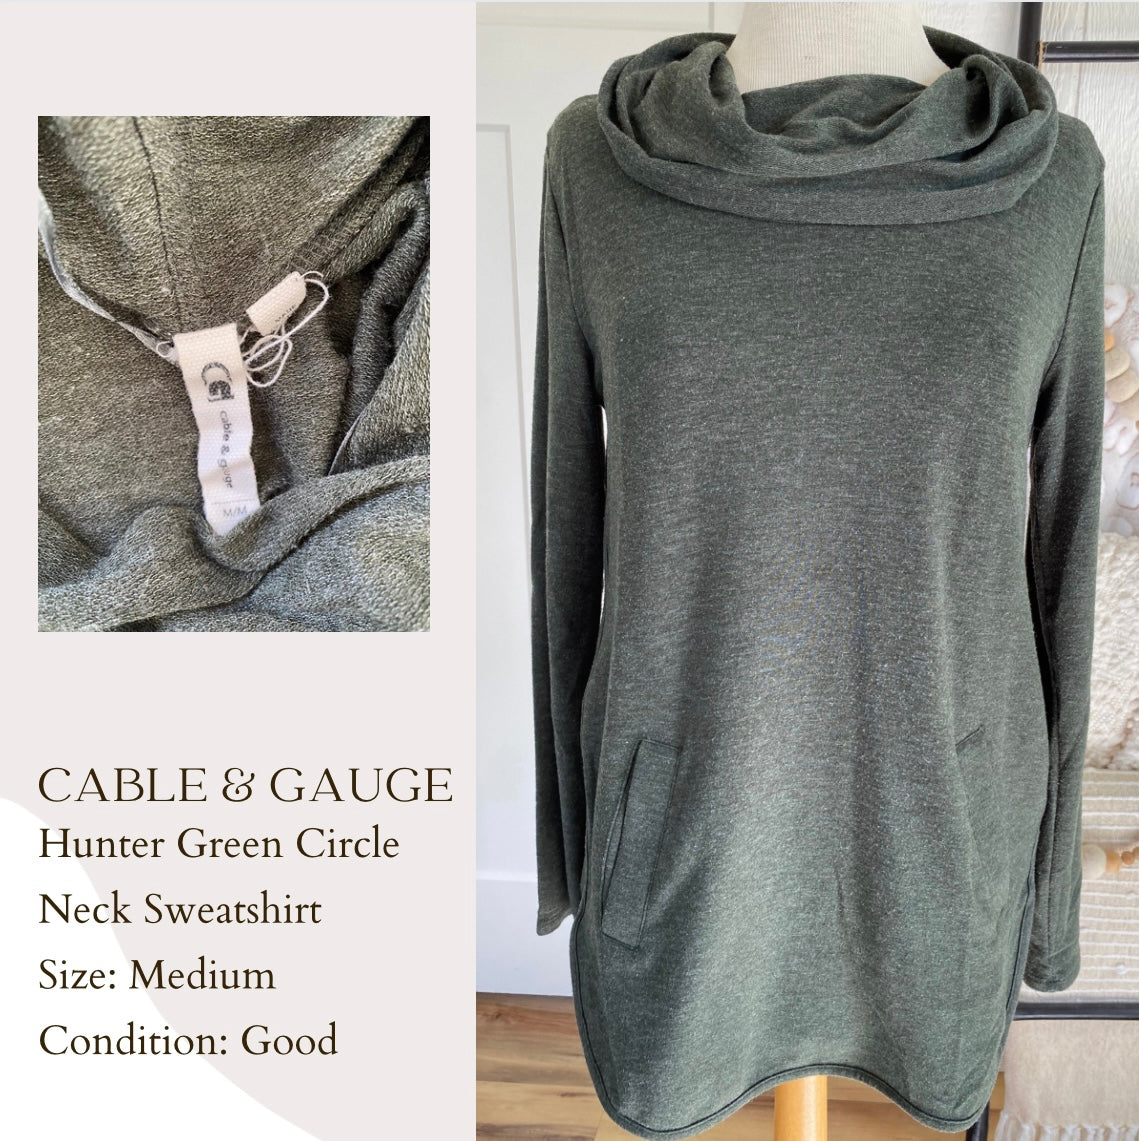 Cable & Gauge Hunter Green Circle Neck Sweatshirt